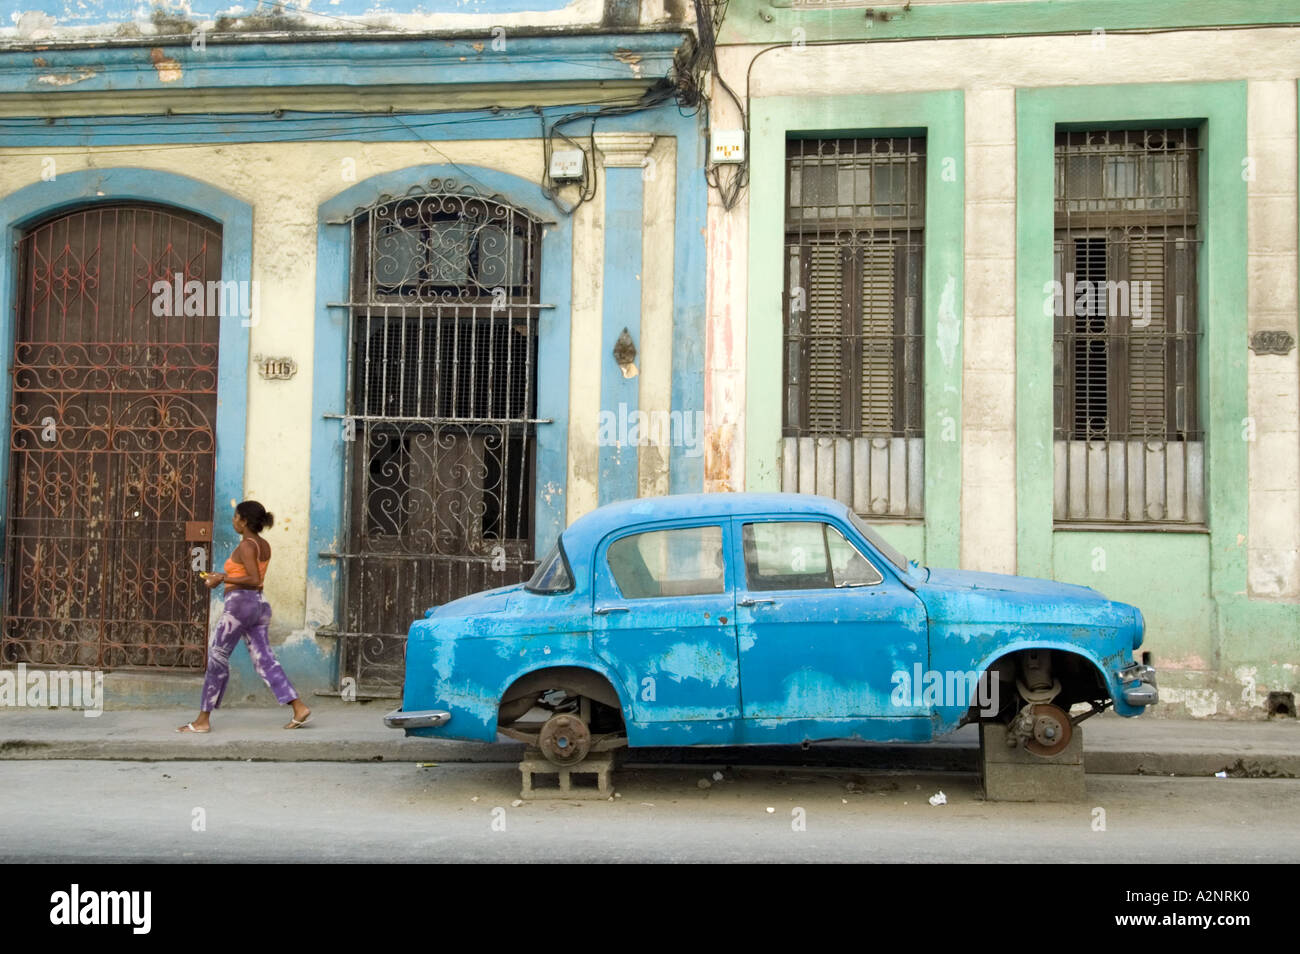 Baufälligen alten Auto ohne Räder ruht auf Blöcke, Havanna-Kuba Stockfoto